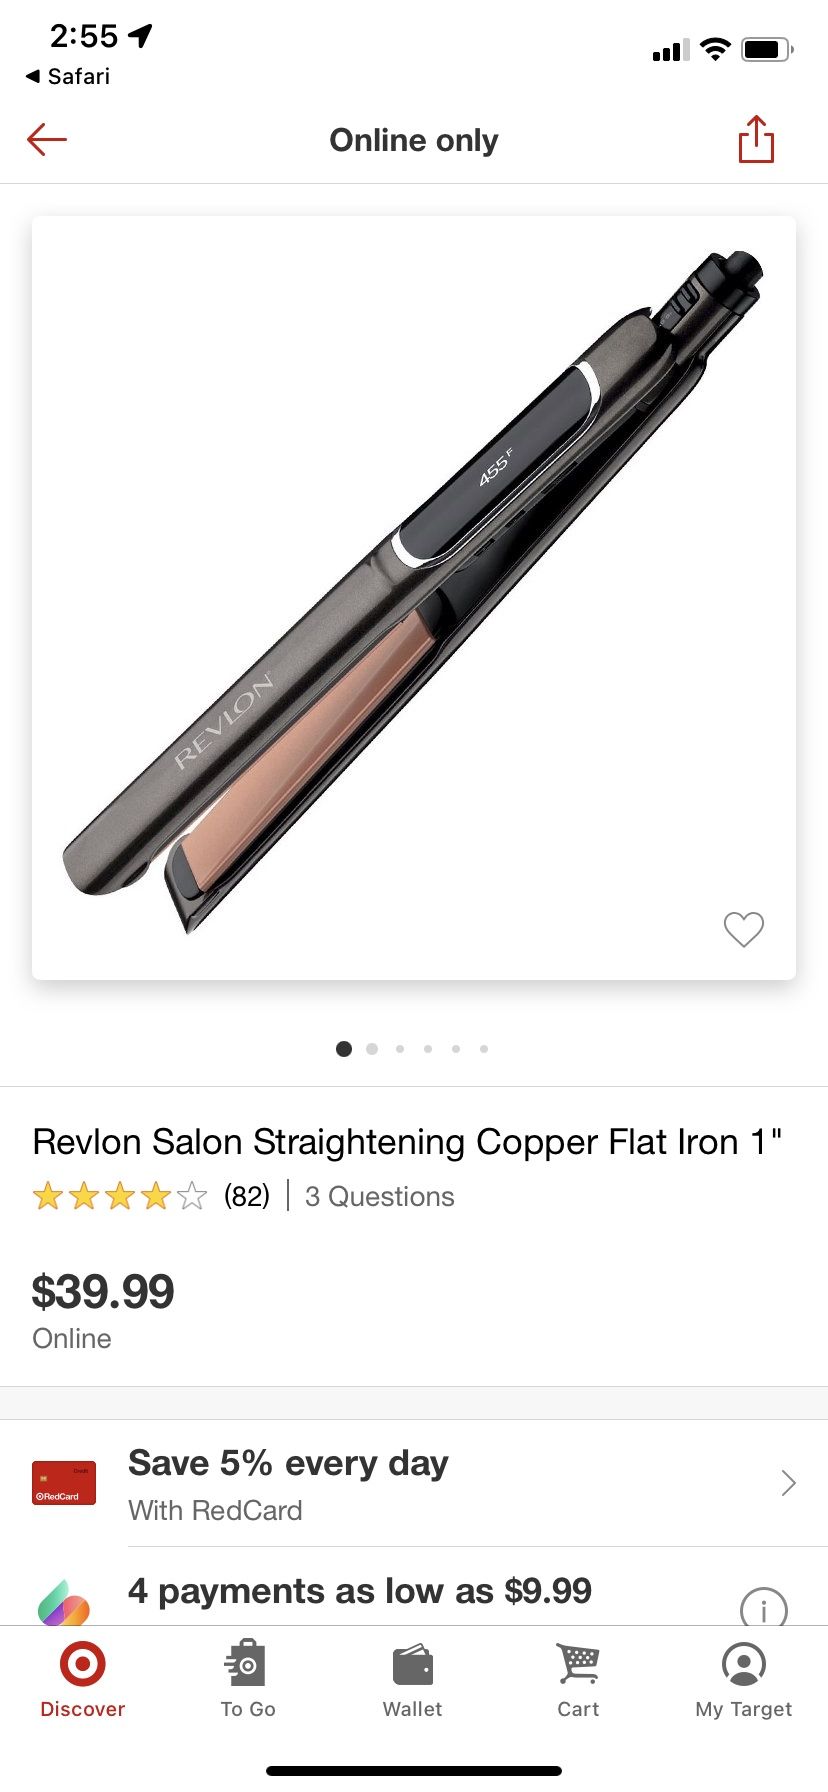 Revelon straightening Copper Flat Iron 1”